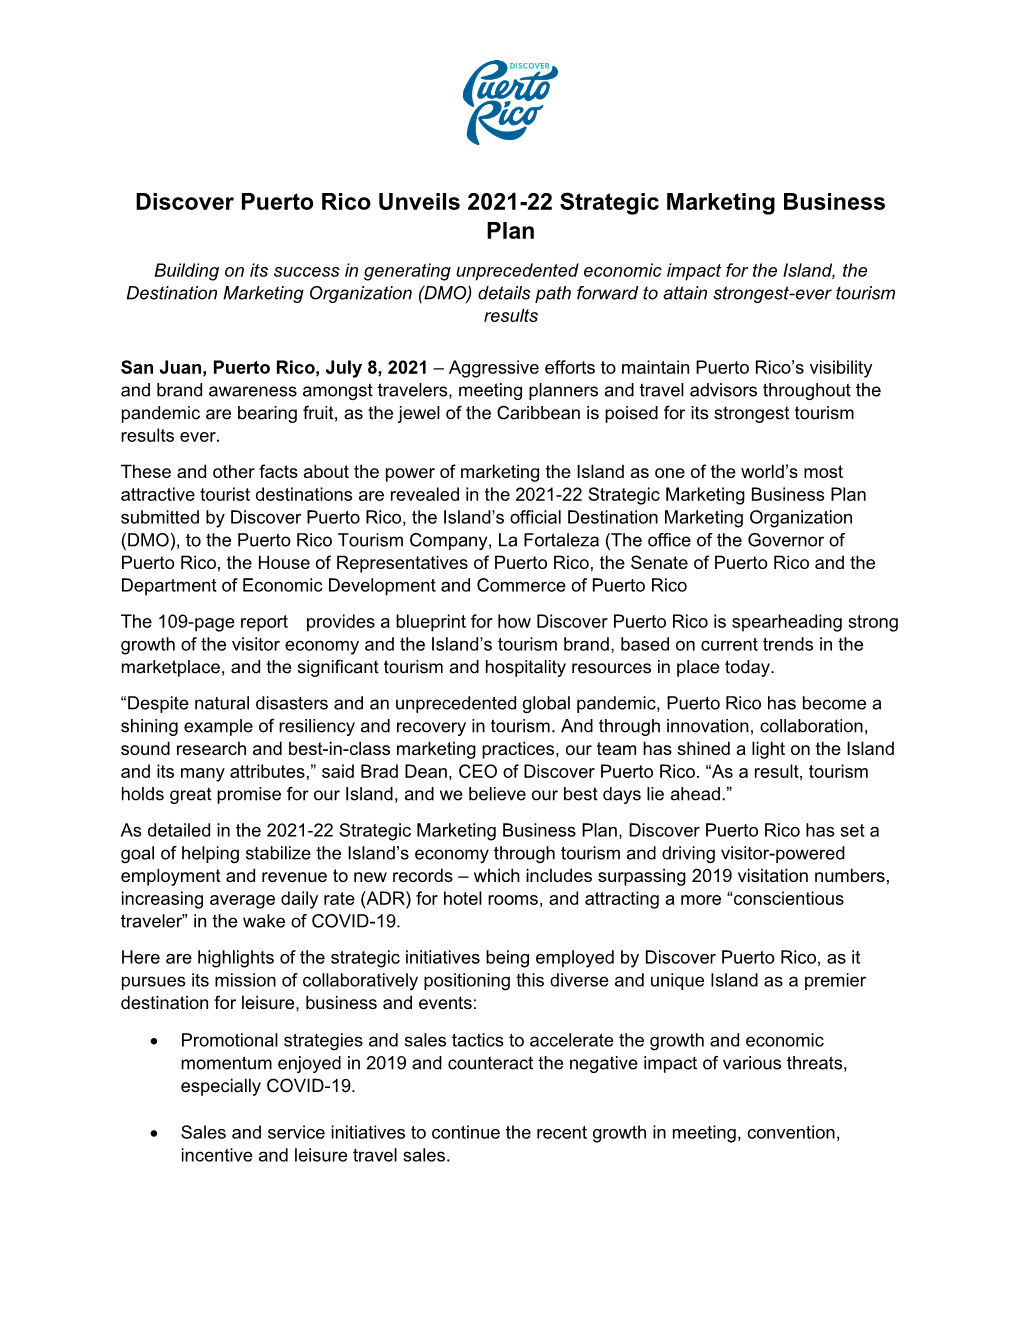 Discover Puerto Rico Unveils 2021-22 Strategic Marketing Business Plan